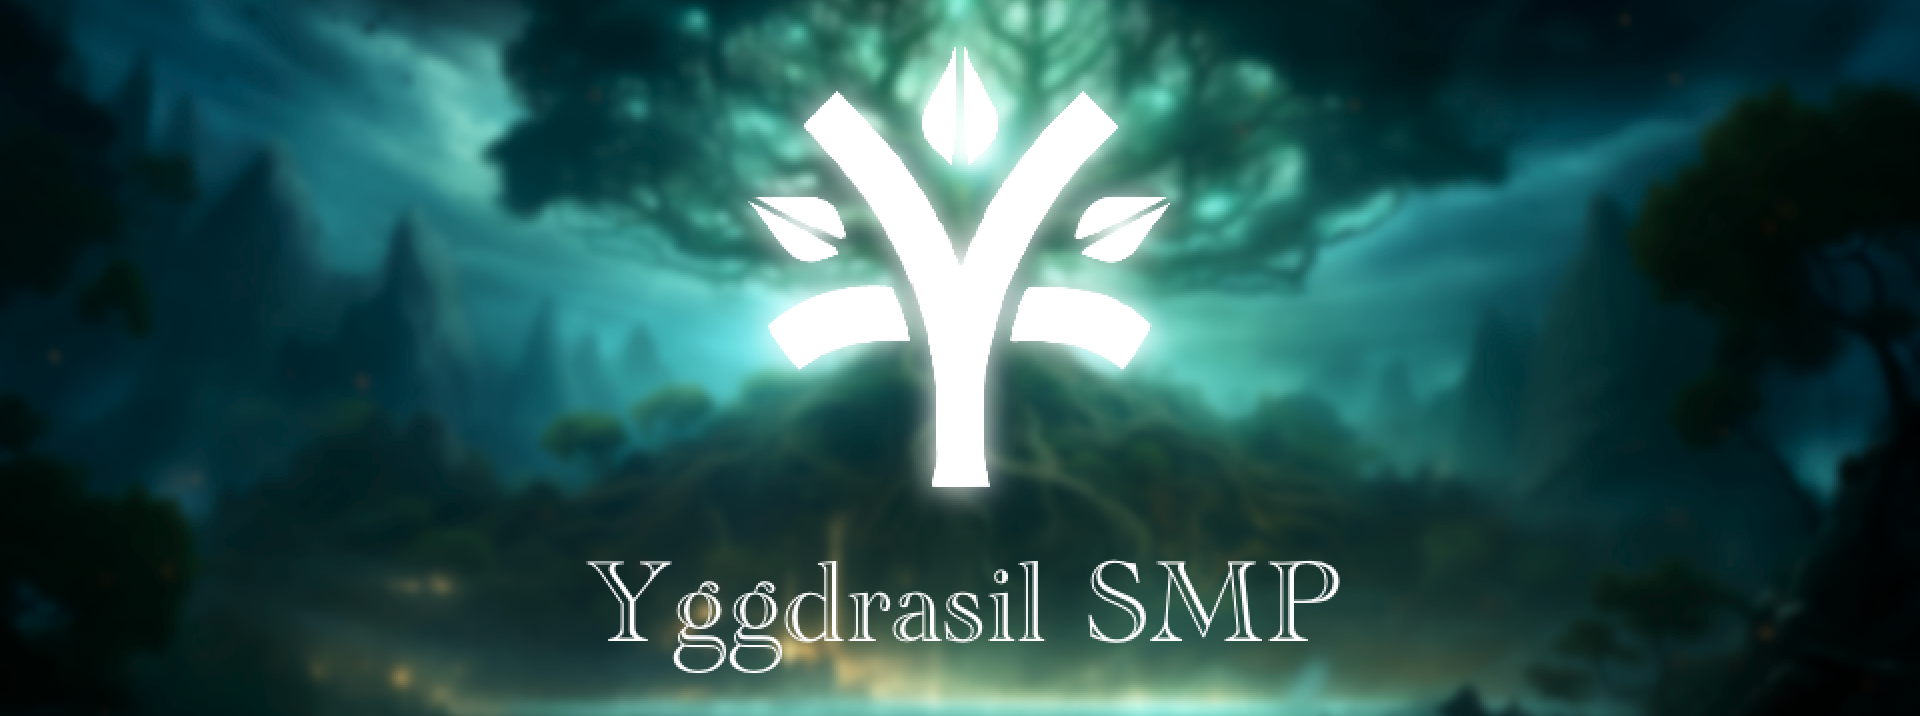 Yggdrasil SMP